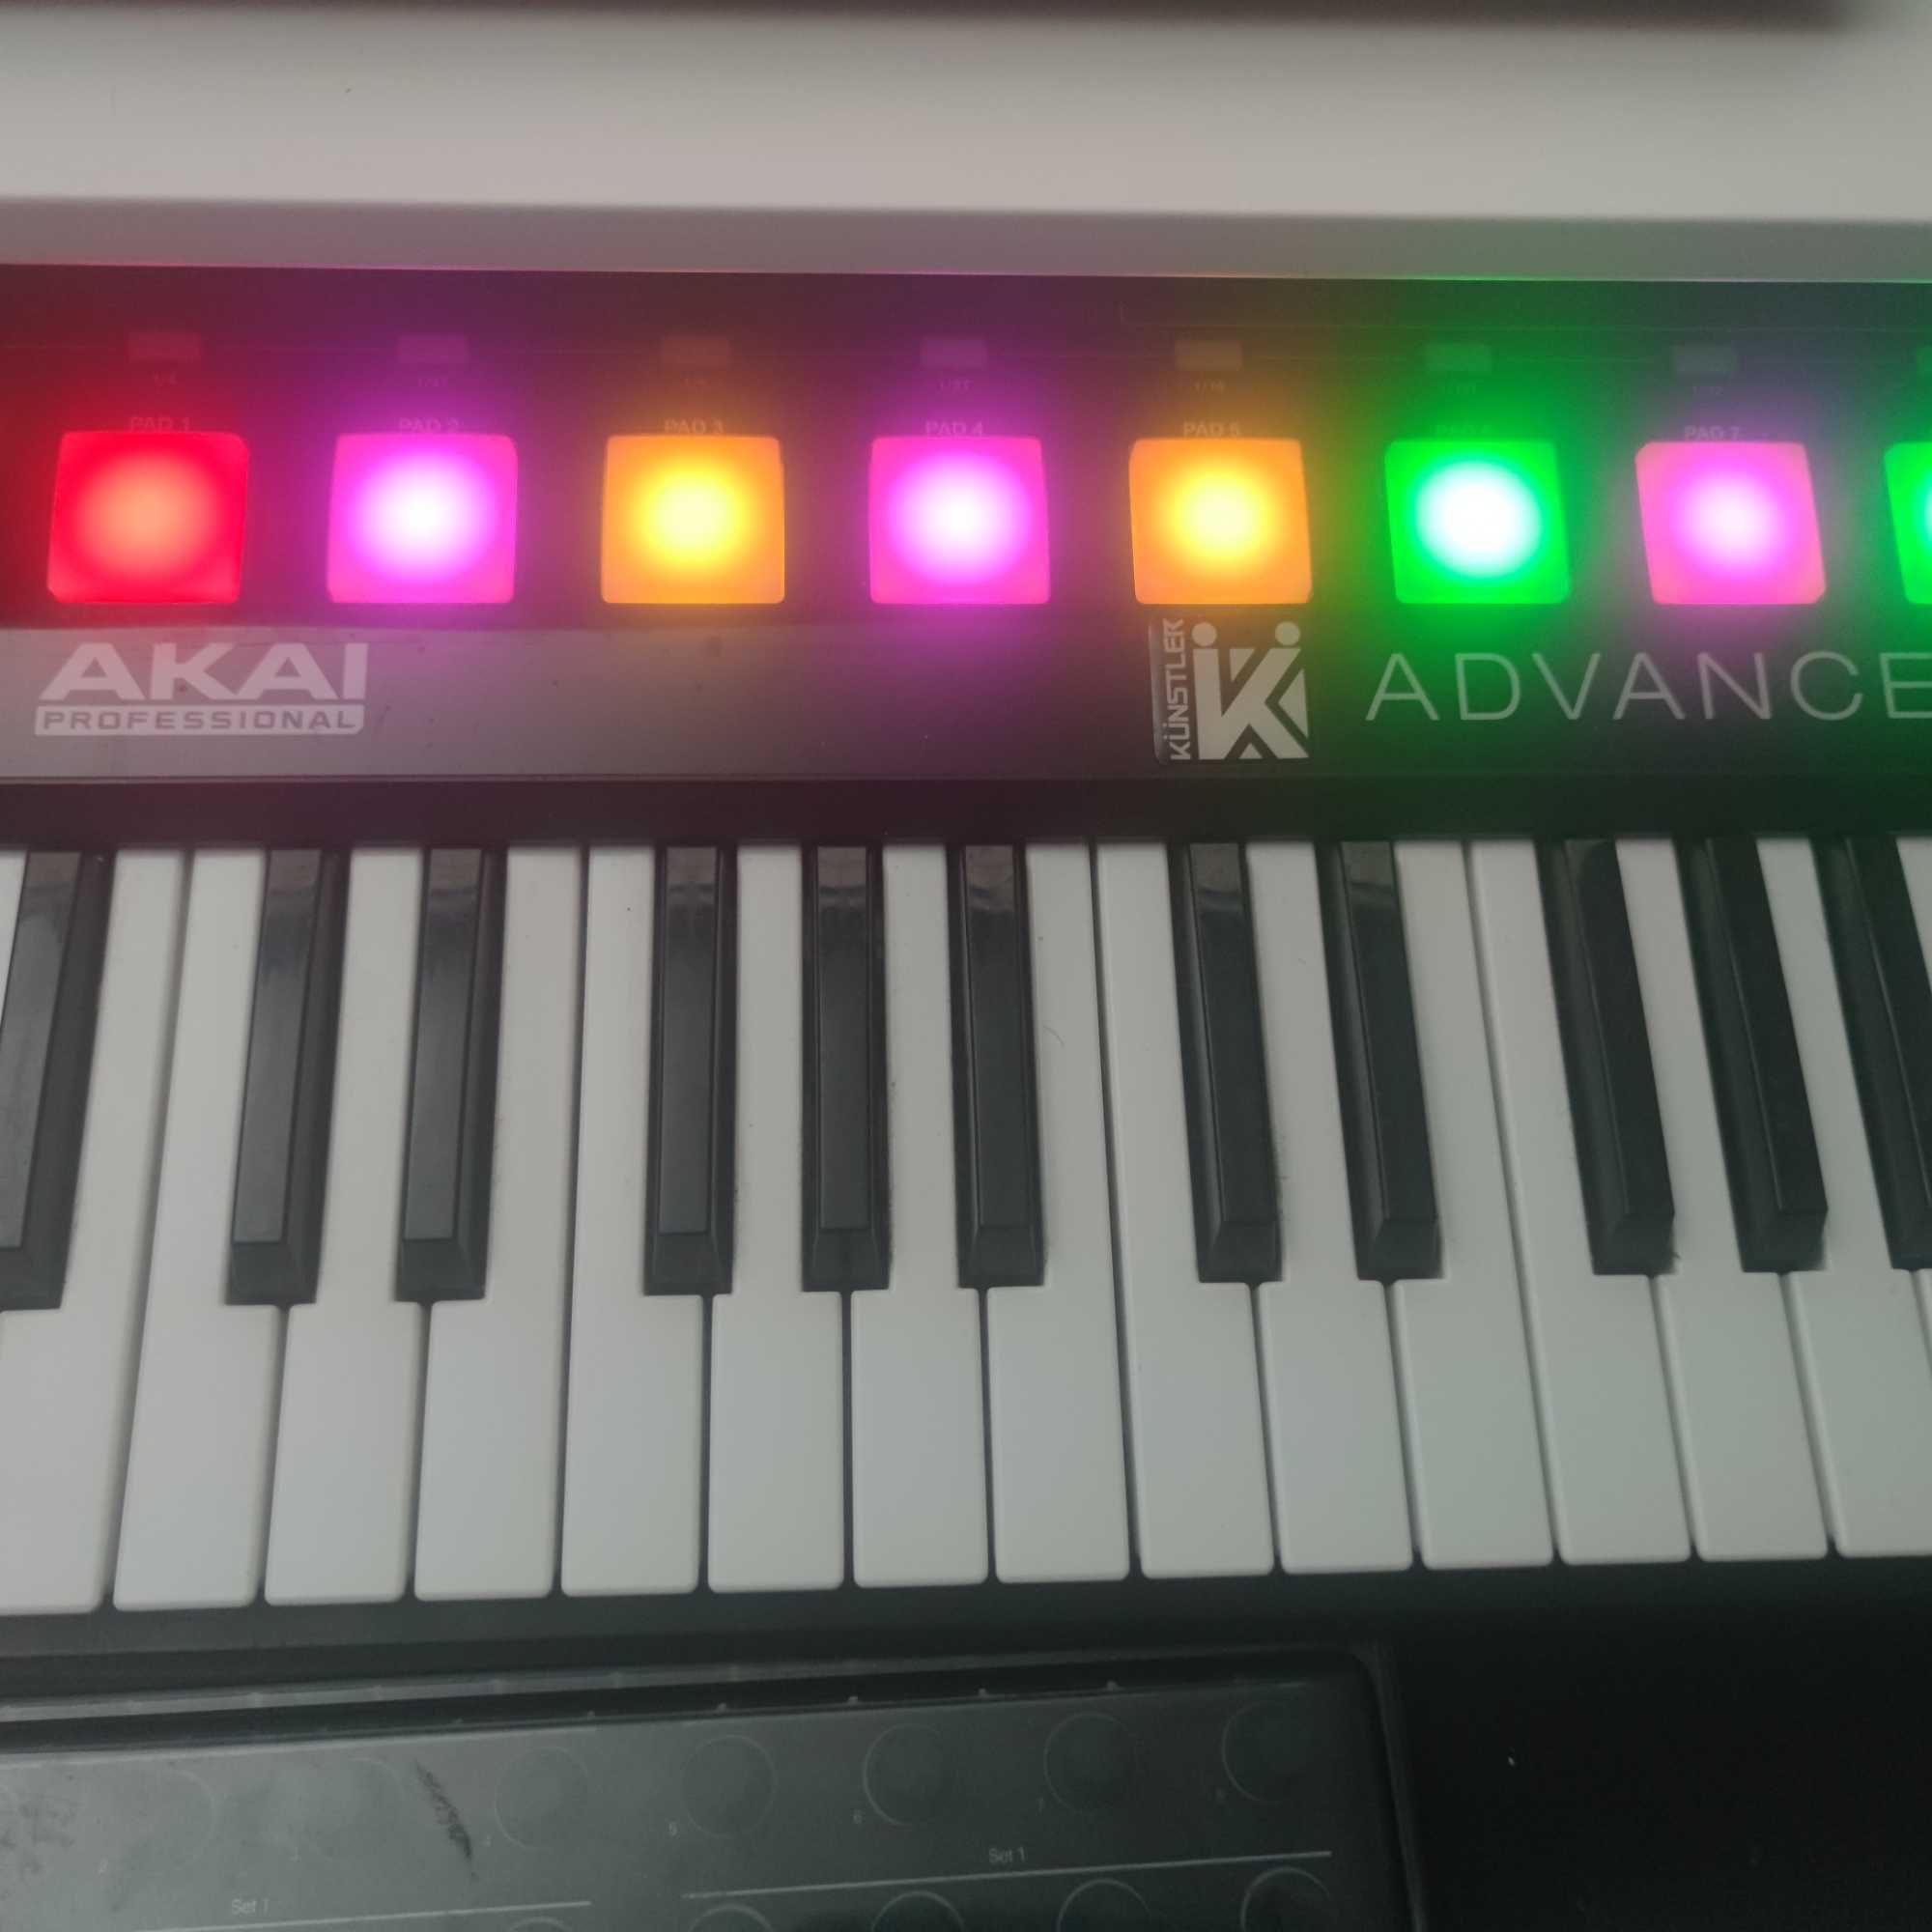 Akai Advance midi keyboard